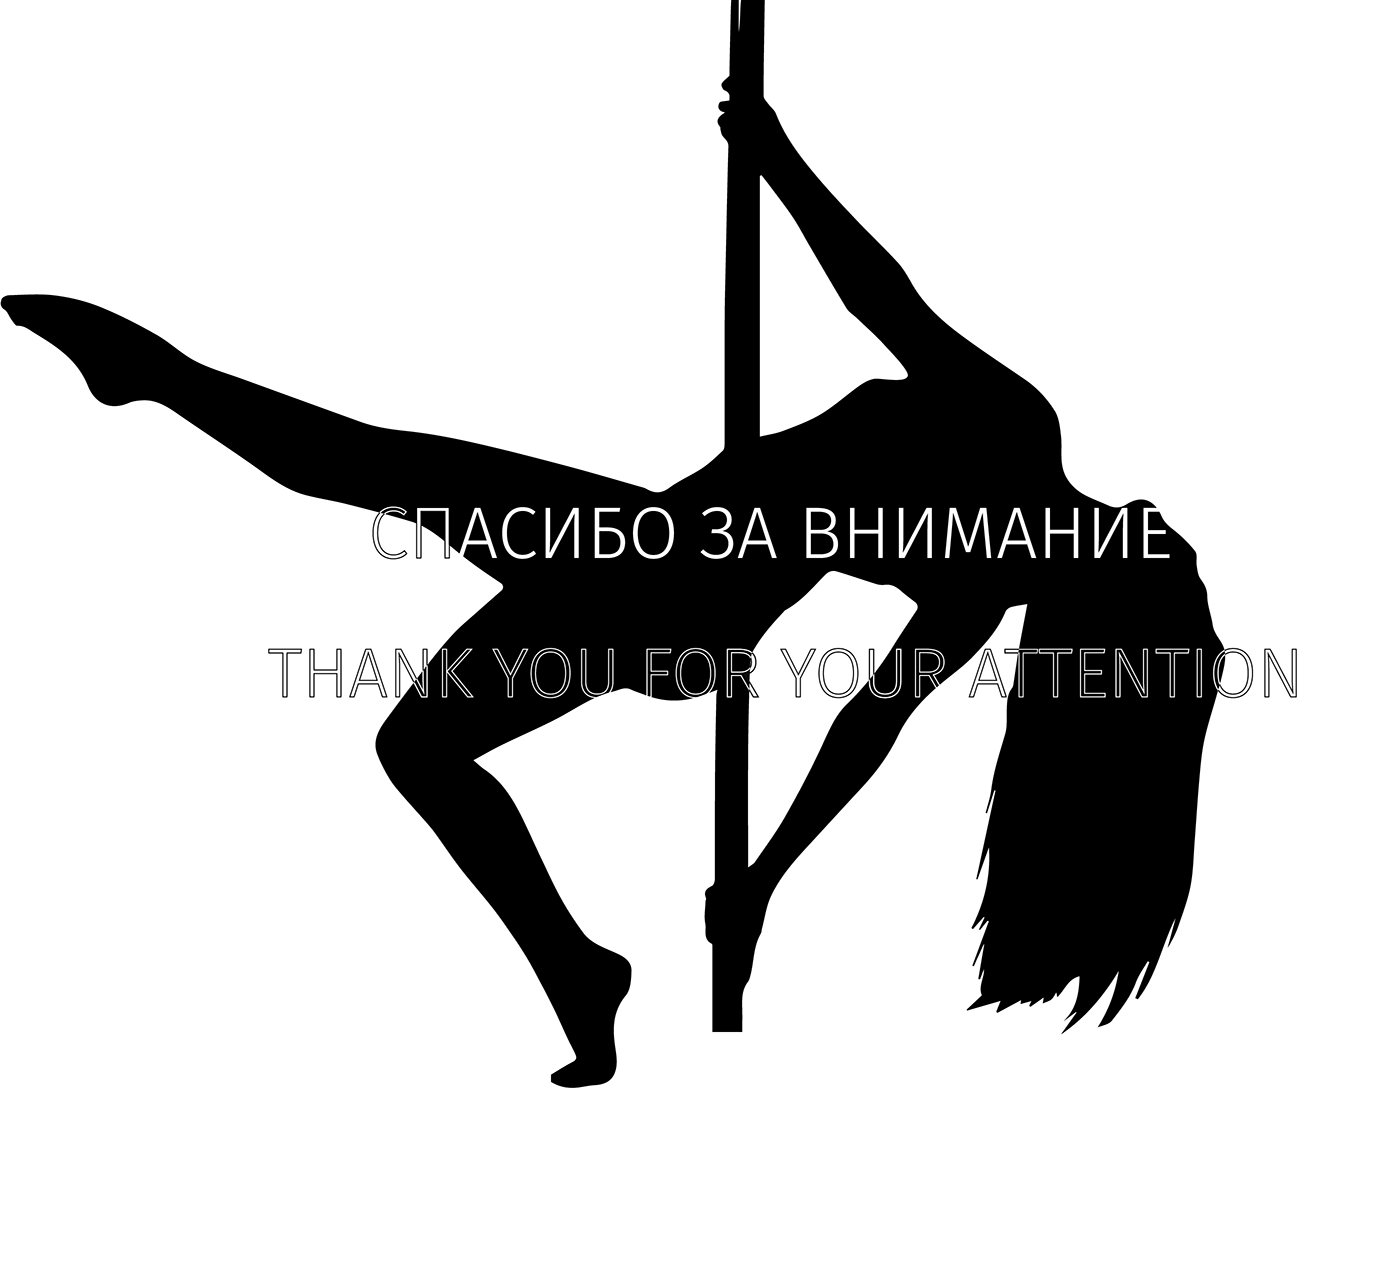 woman model pole dance DANCE   девушка персонаж афиша постер полдэнс студия танцев